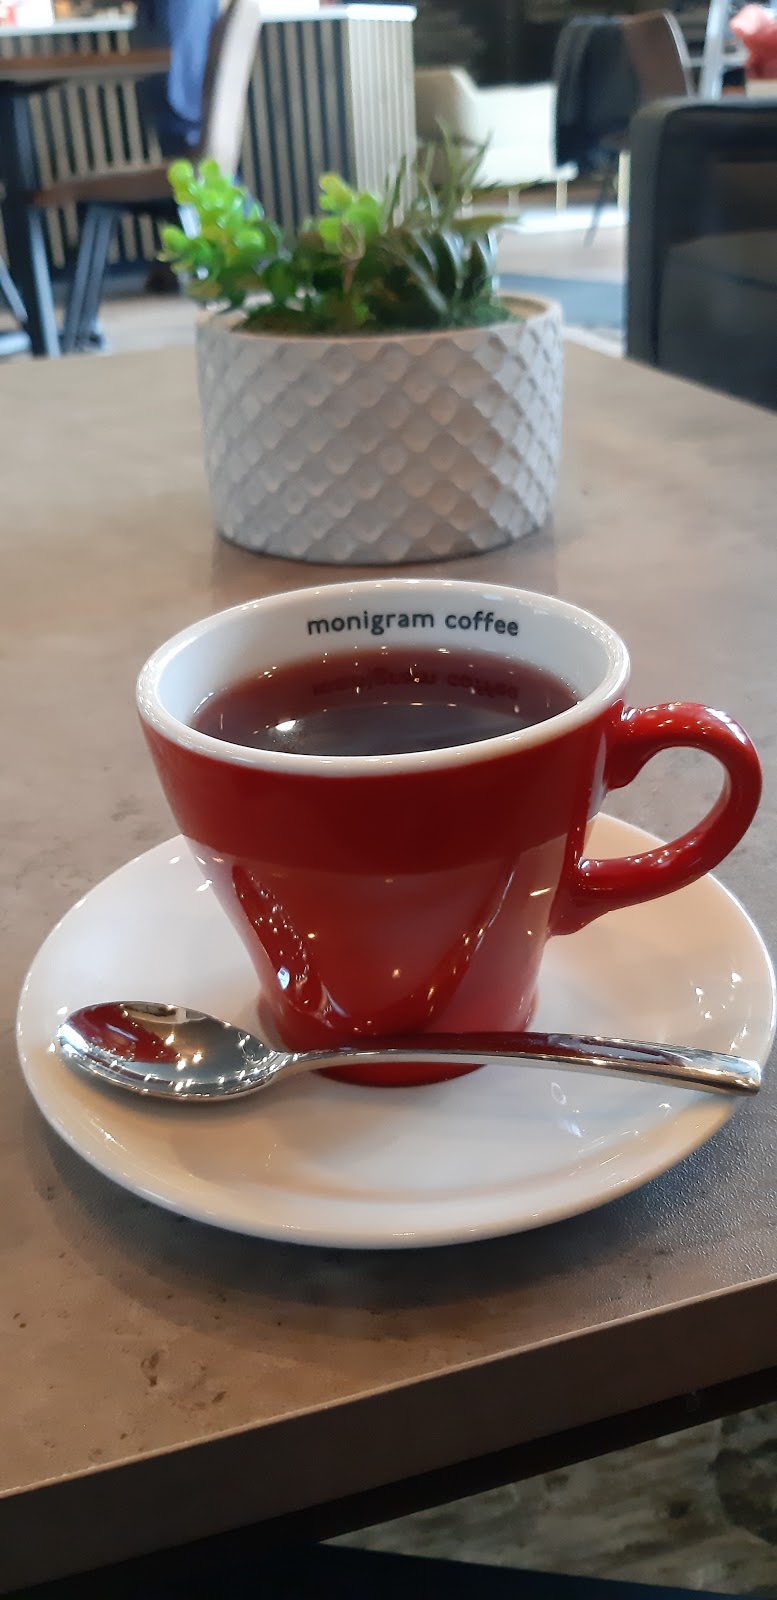 Monigram Coffee Midtown | 618 King St W, Kitchener, ON N2G 1C8, Canada | Phone: (519) 804-4119